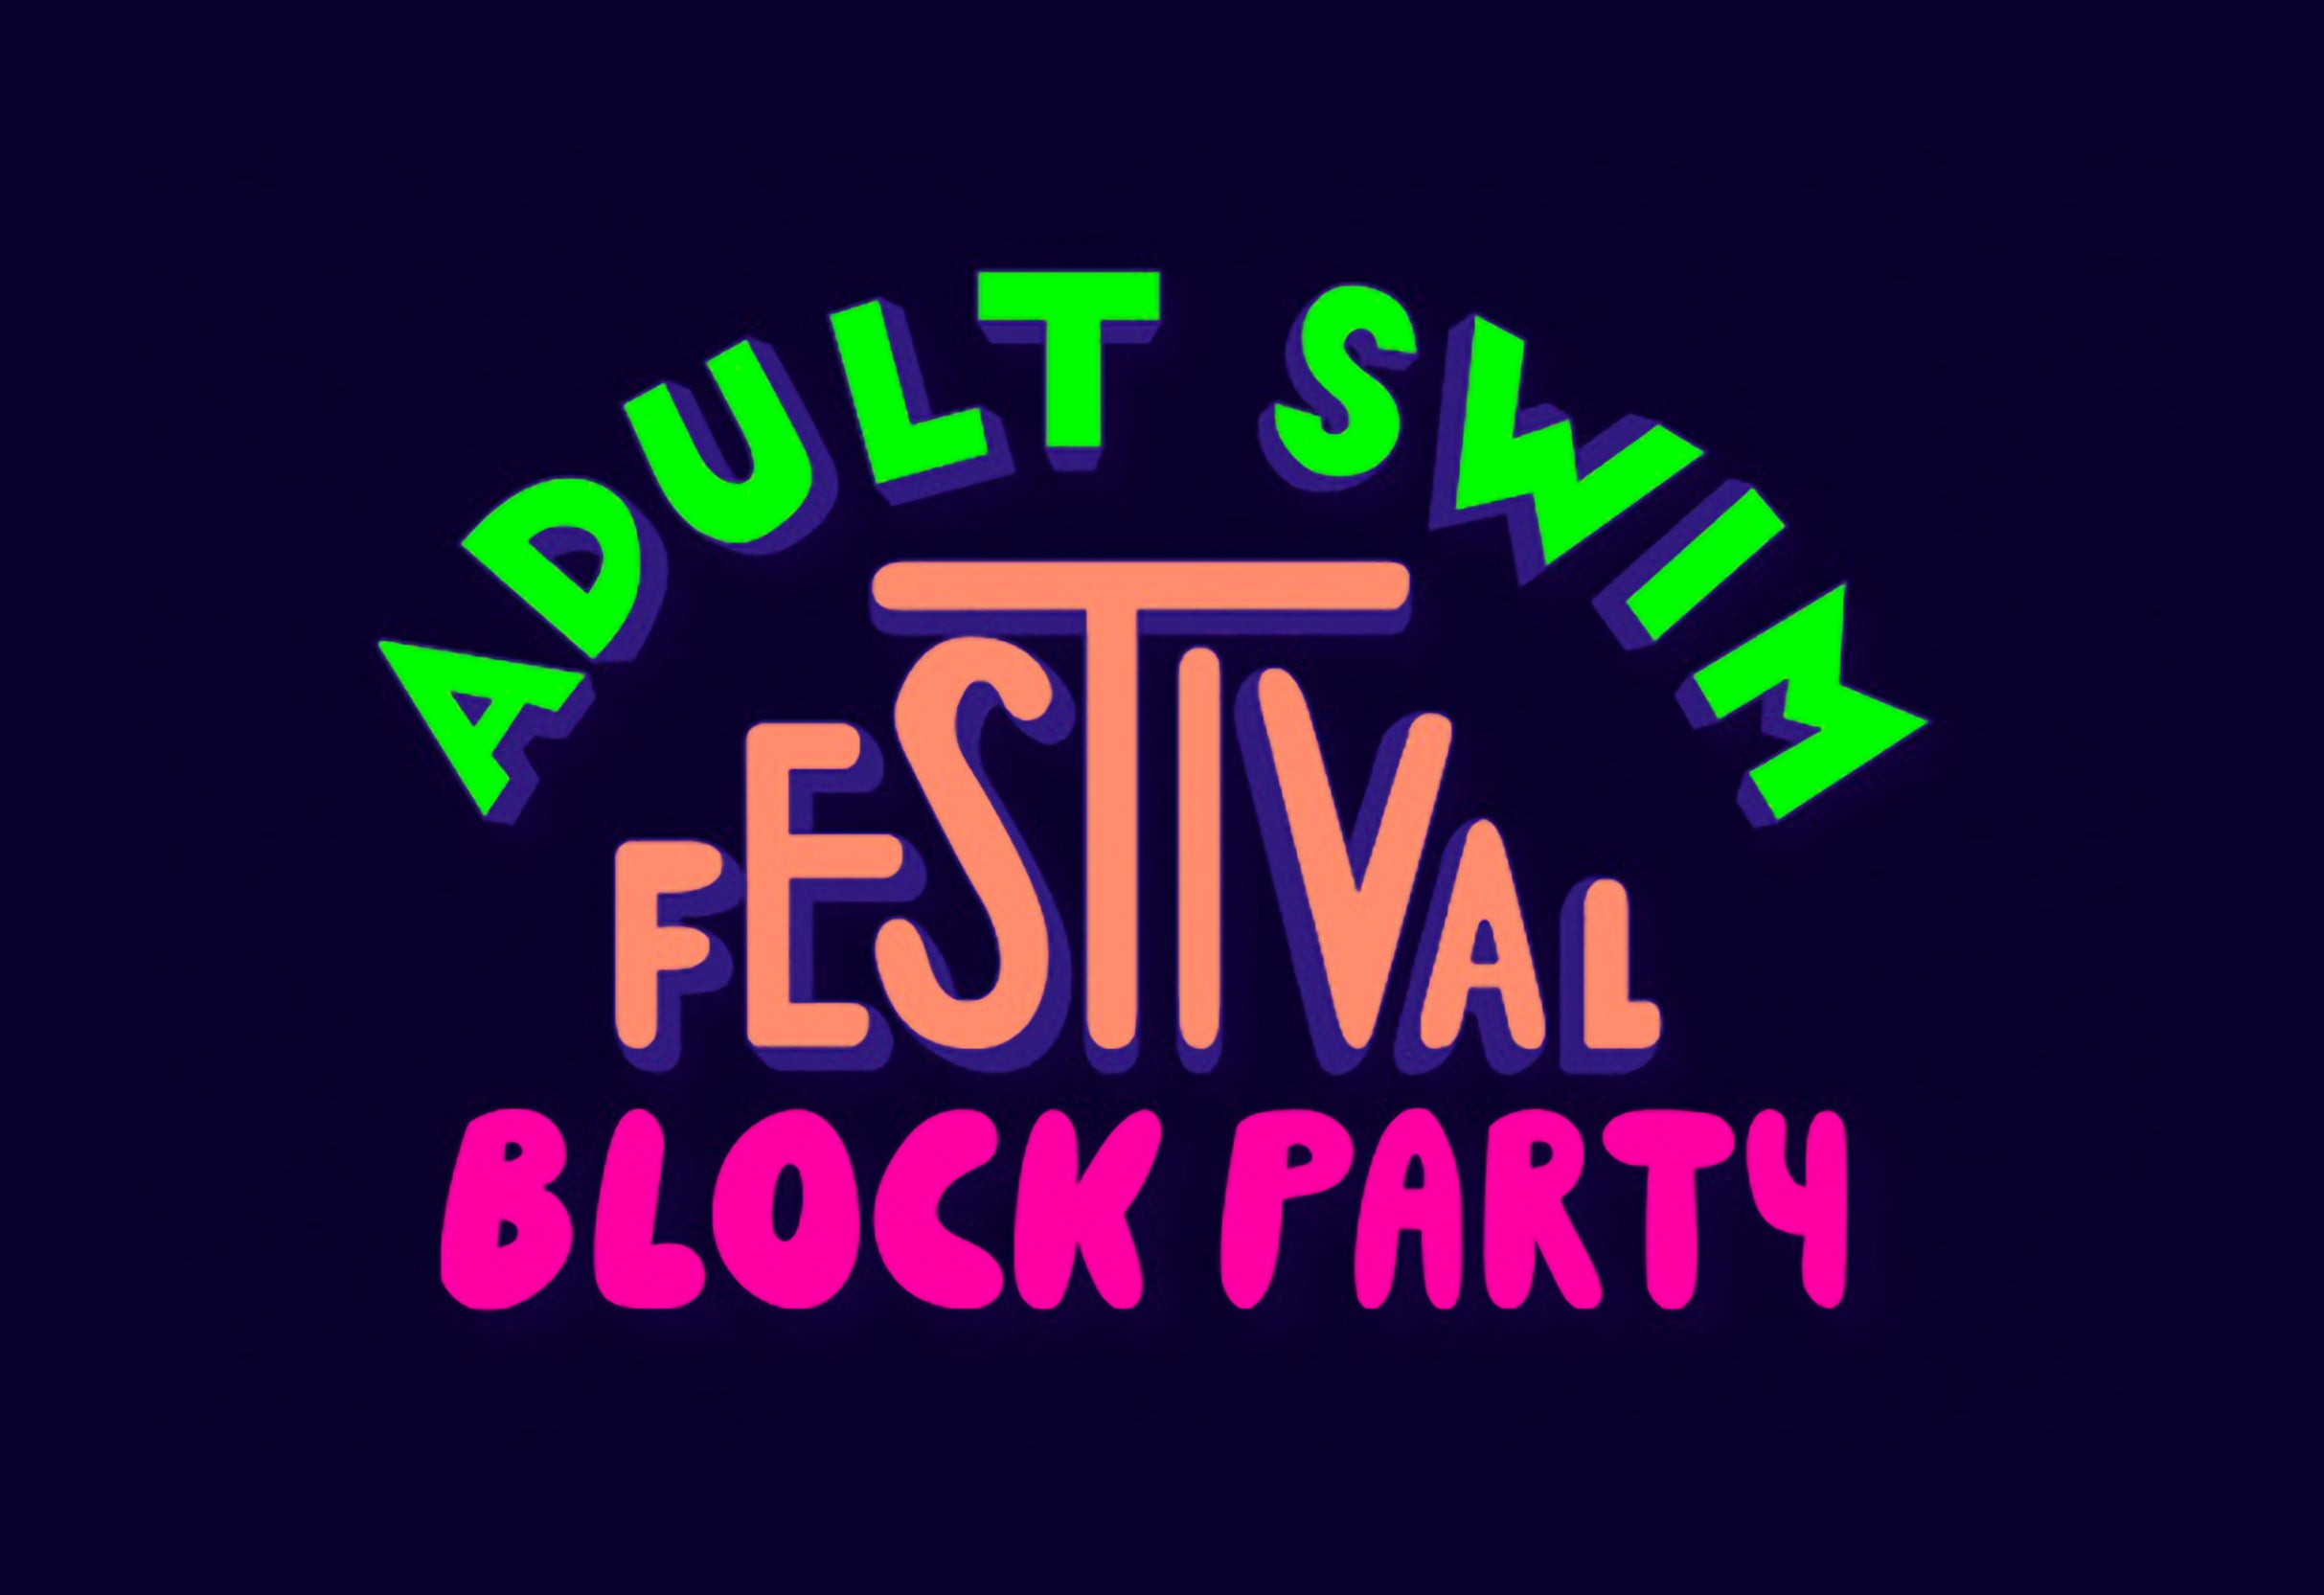 Rosebud Baker w/ Megan Koester- Adult Swim Festival Block Party in Philadelphia promo photo for Live Nation presale offer code